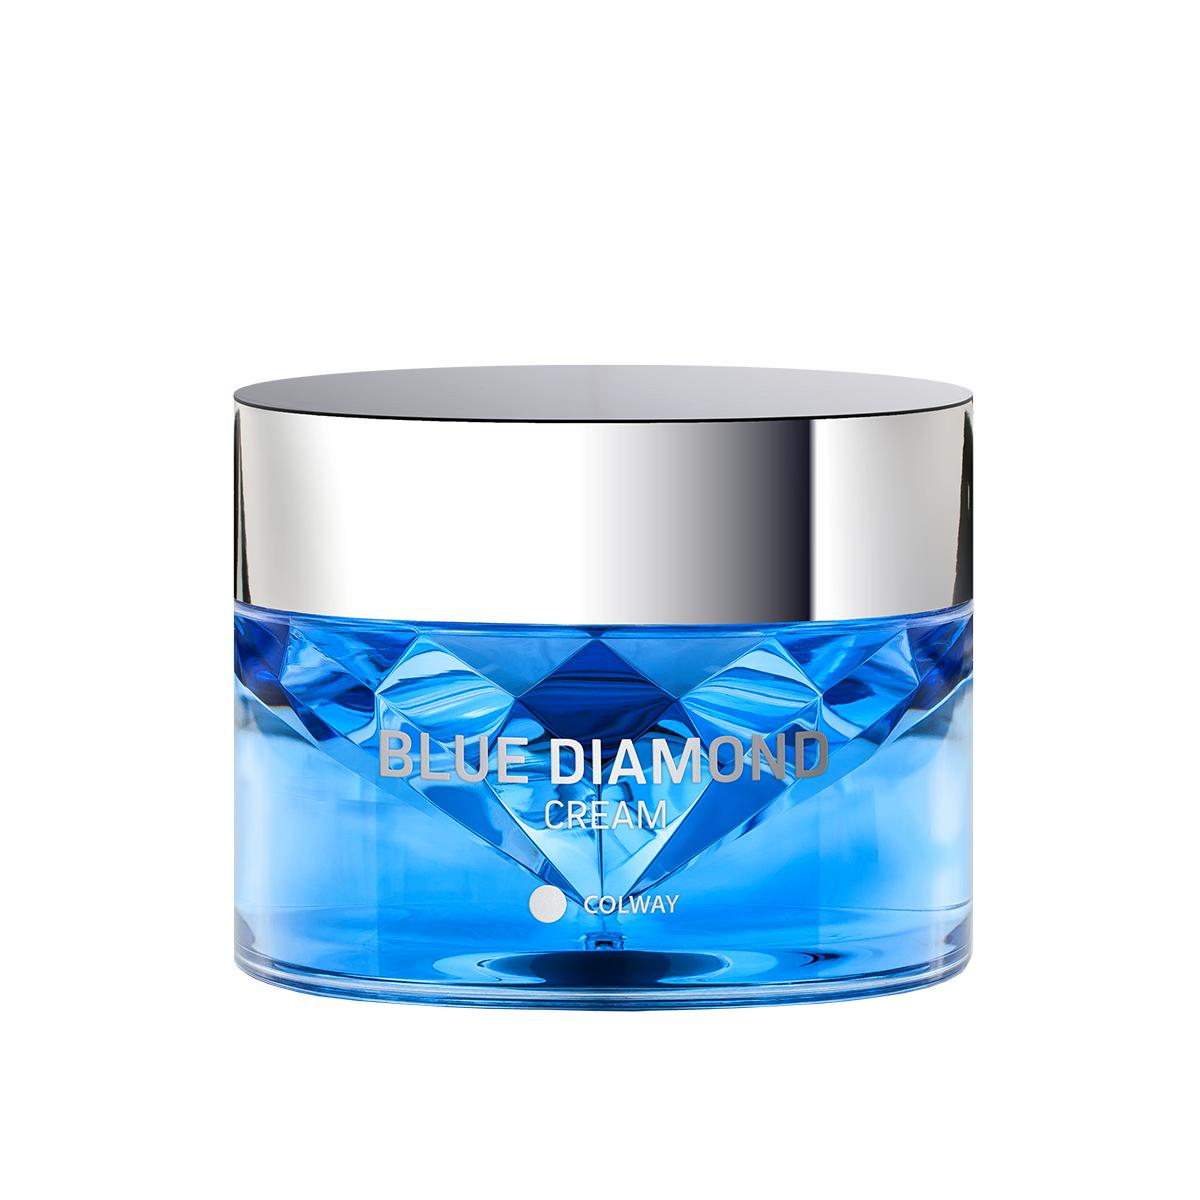 Colway Blue Diamond Cream Krem Niebieski Diament do skóry dojrzałej 50ml